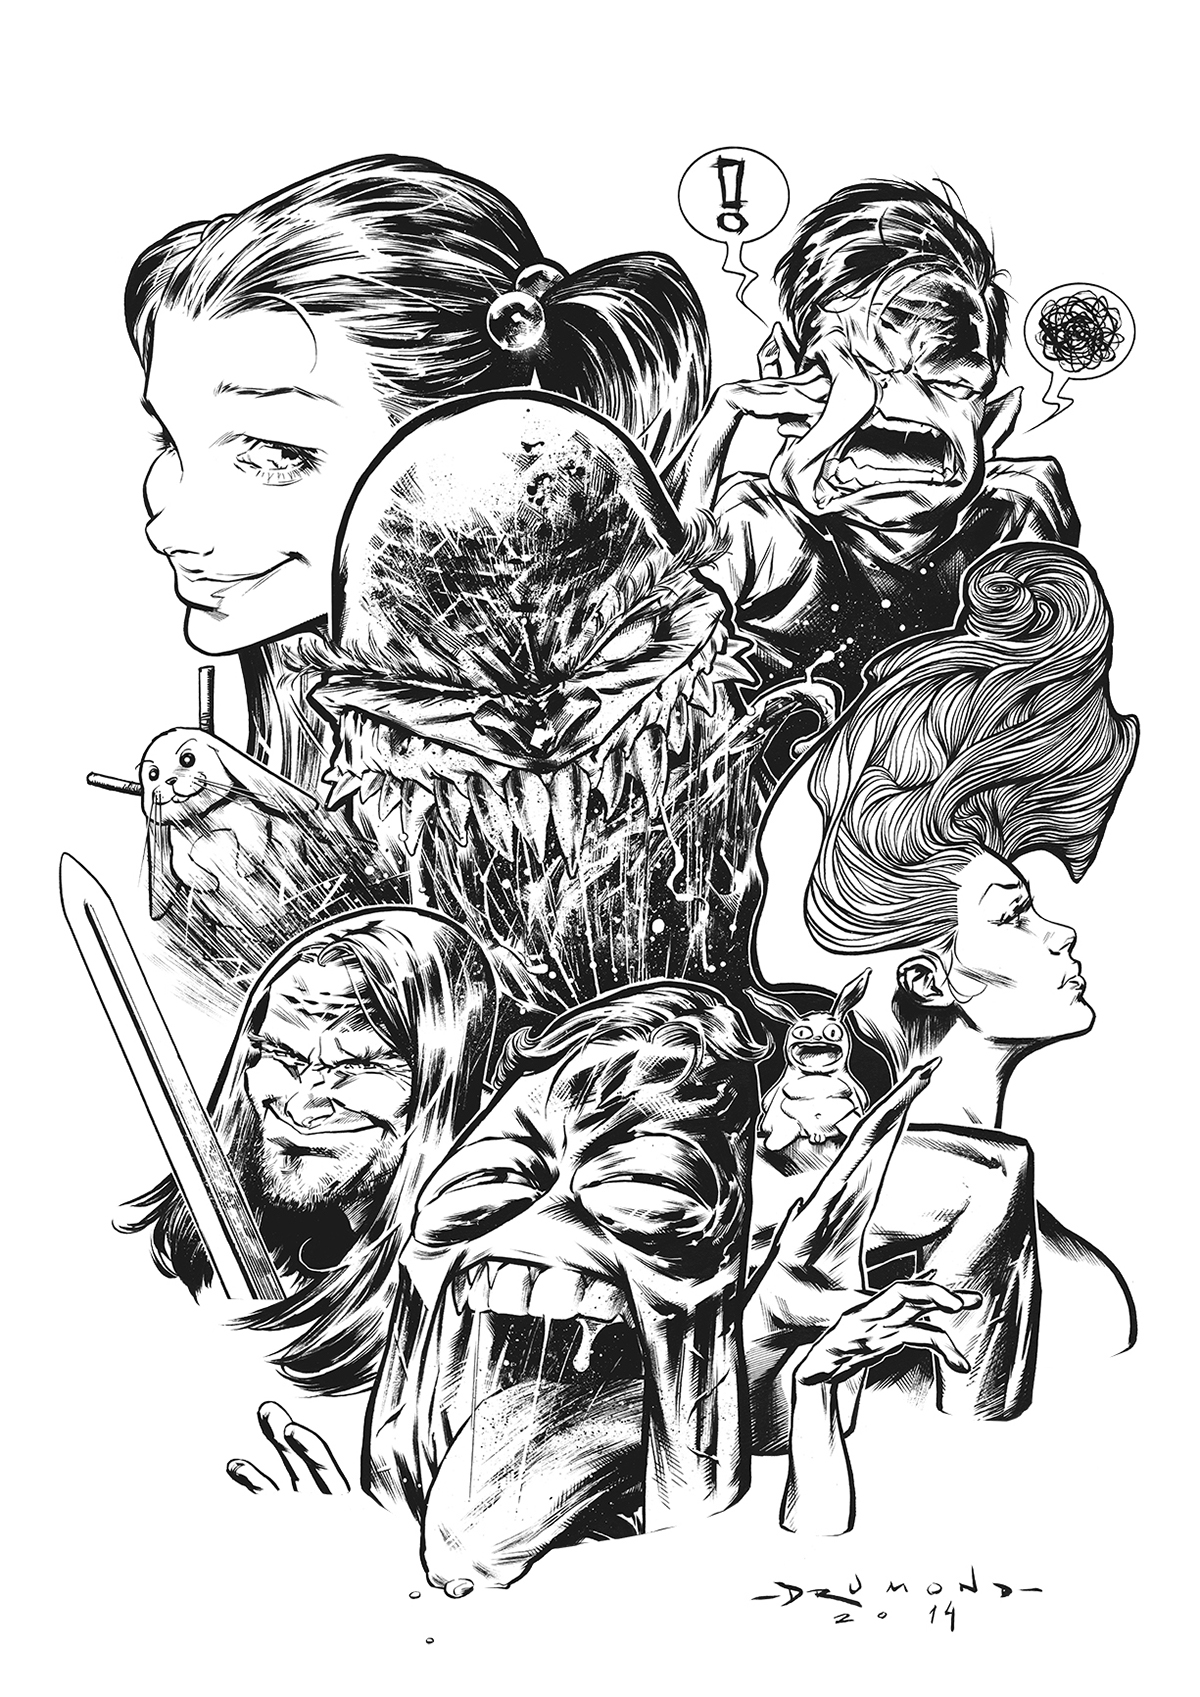 Web mag cover ink online free comics characters mix design brush pen nib girl monster